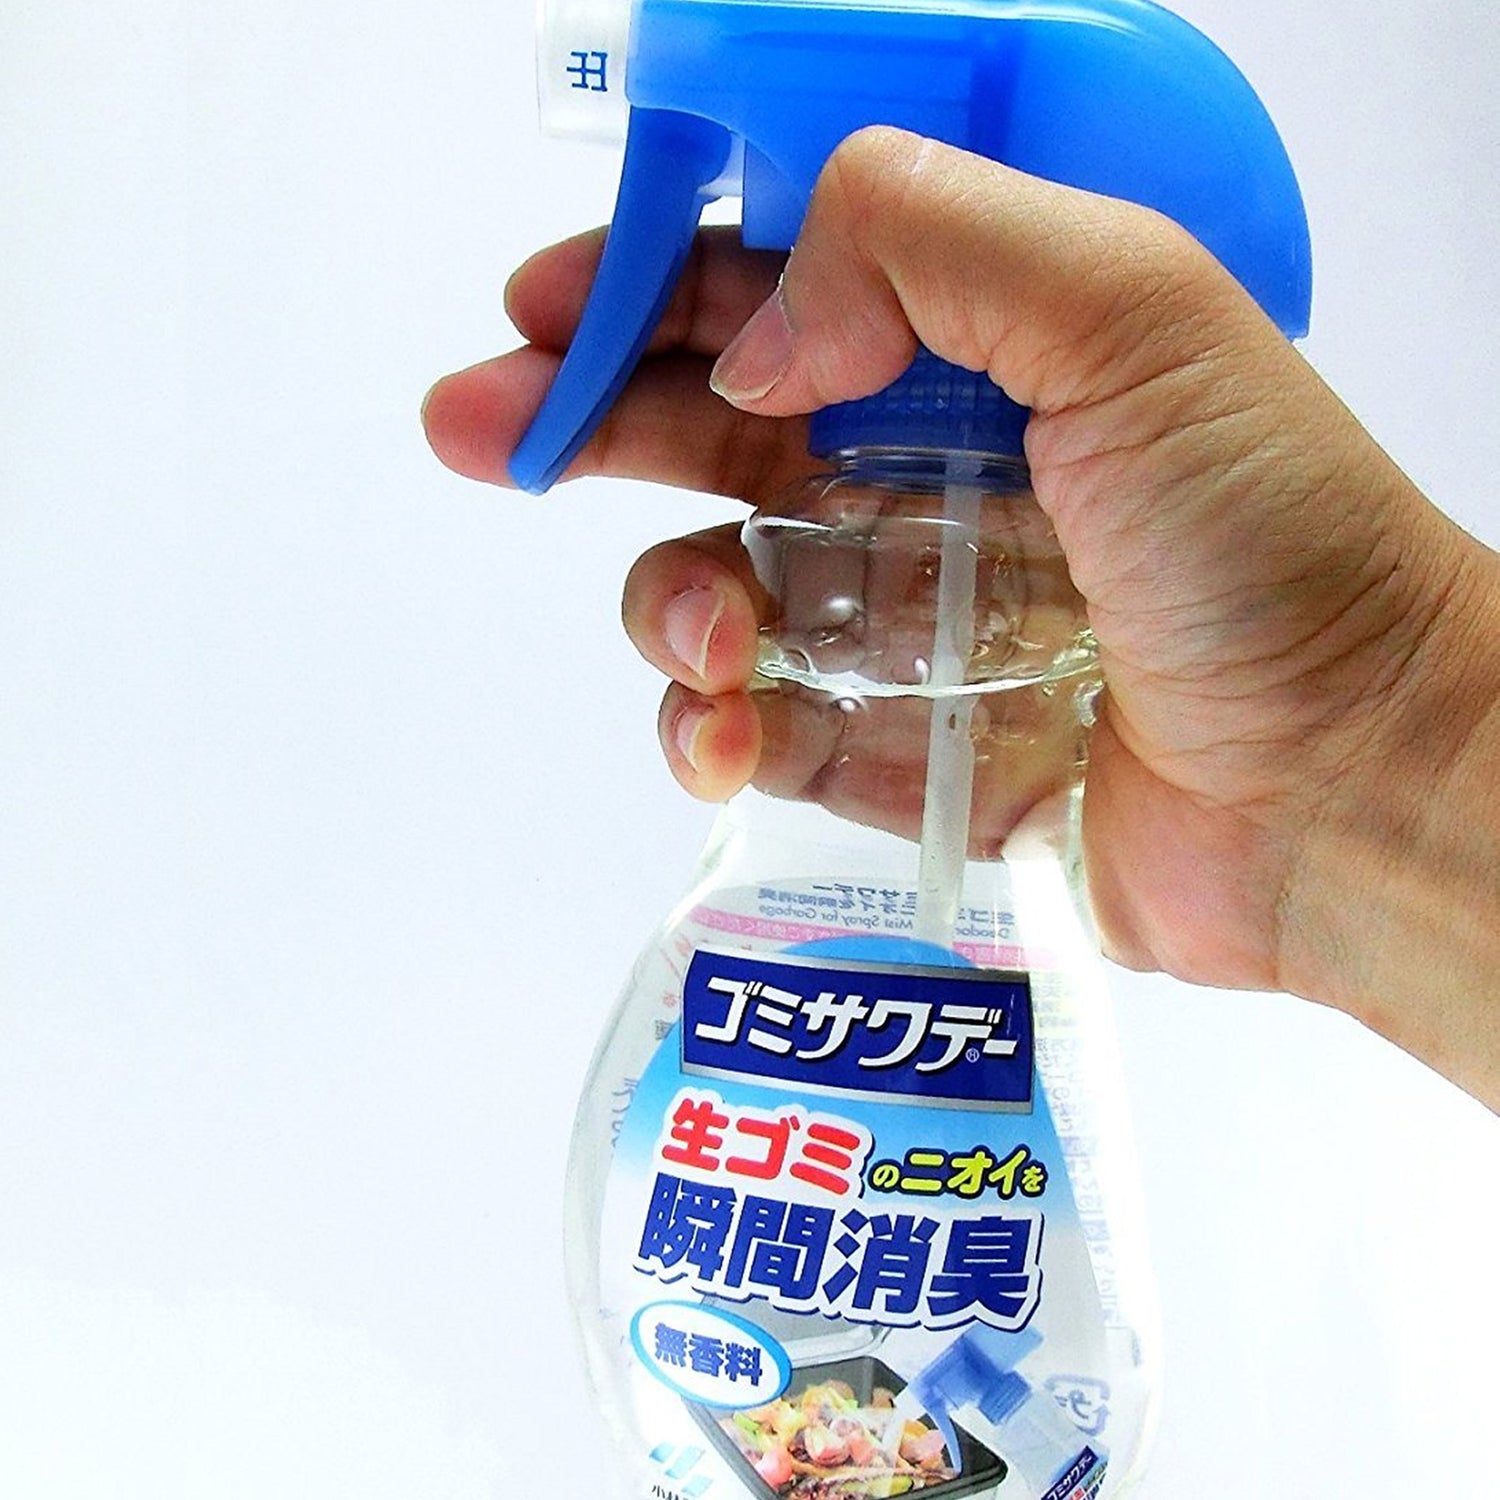 KOBAYASHI Garbage Air Deodorant Spray 230ml